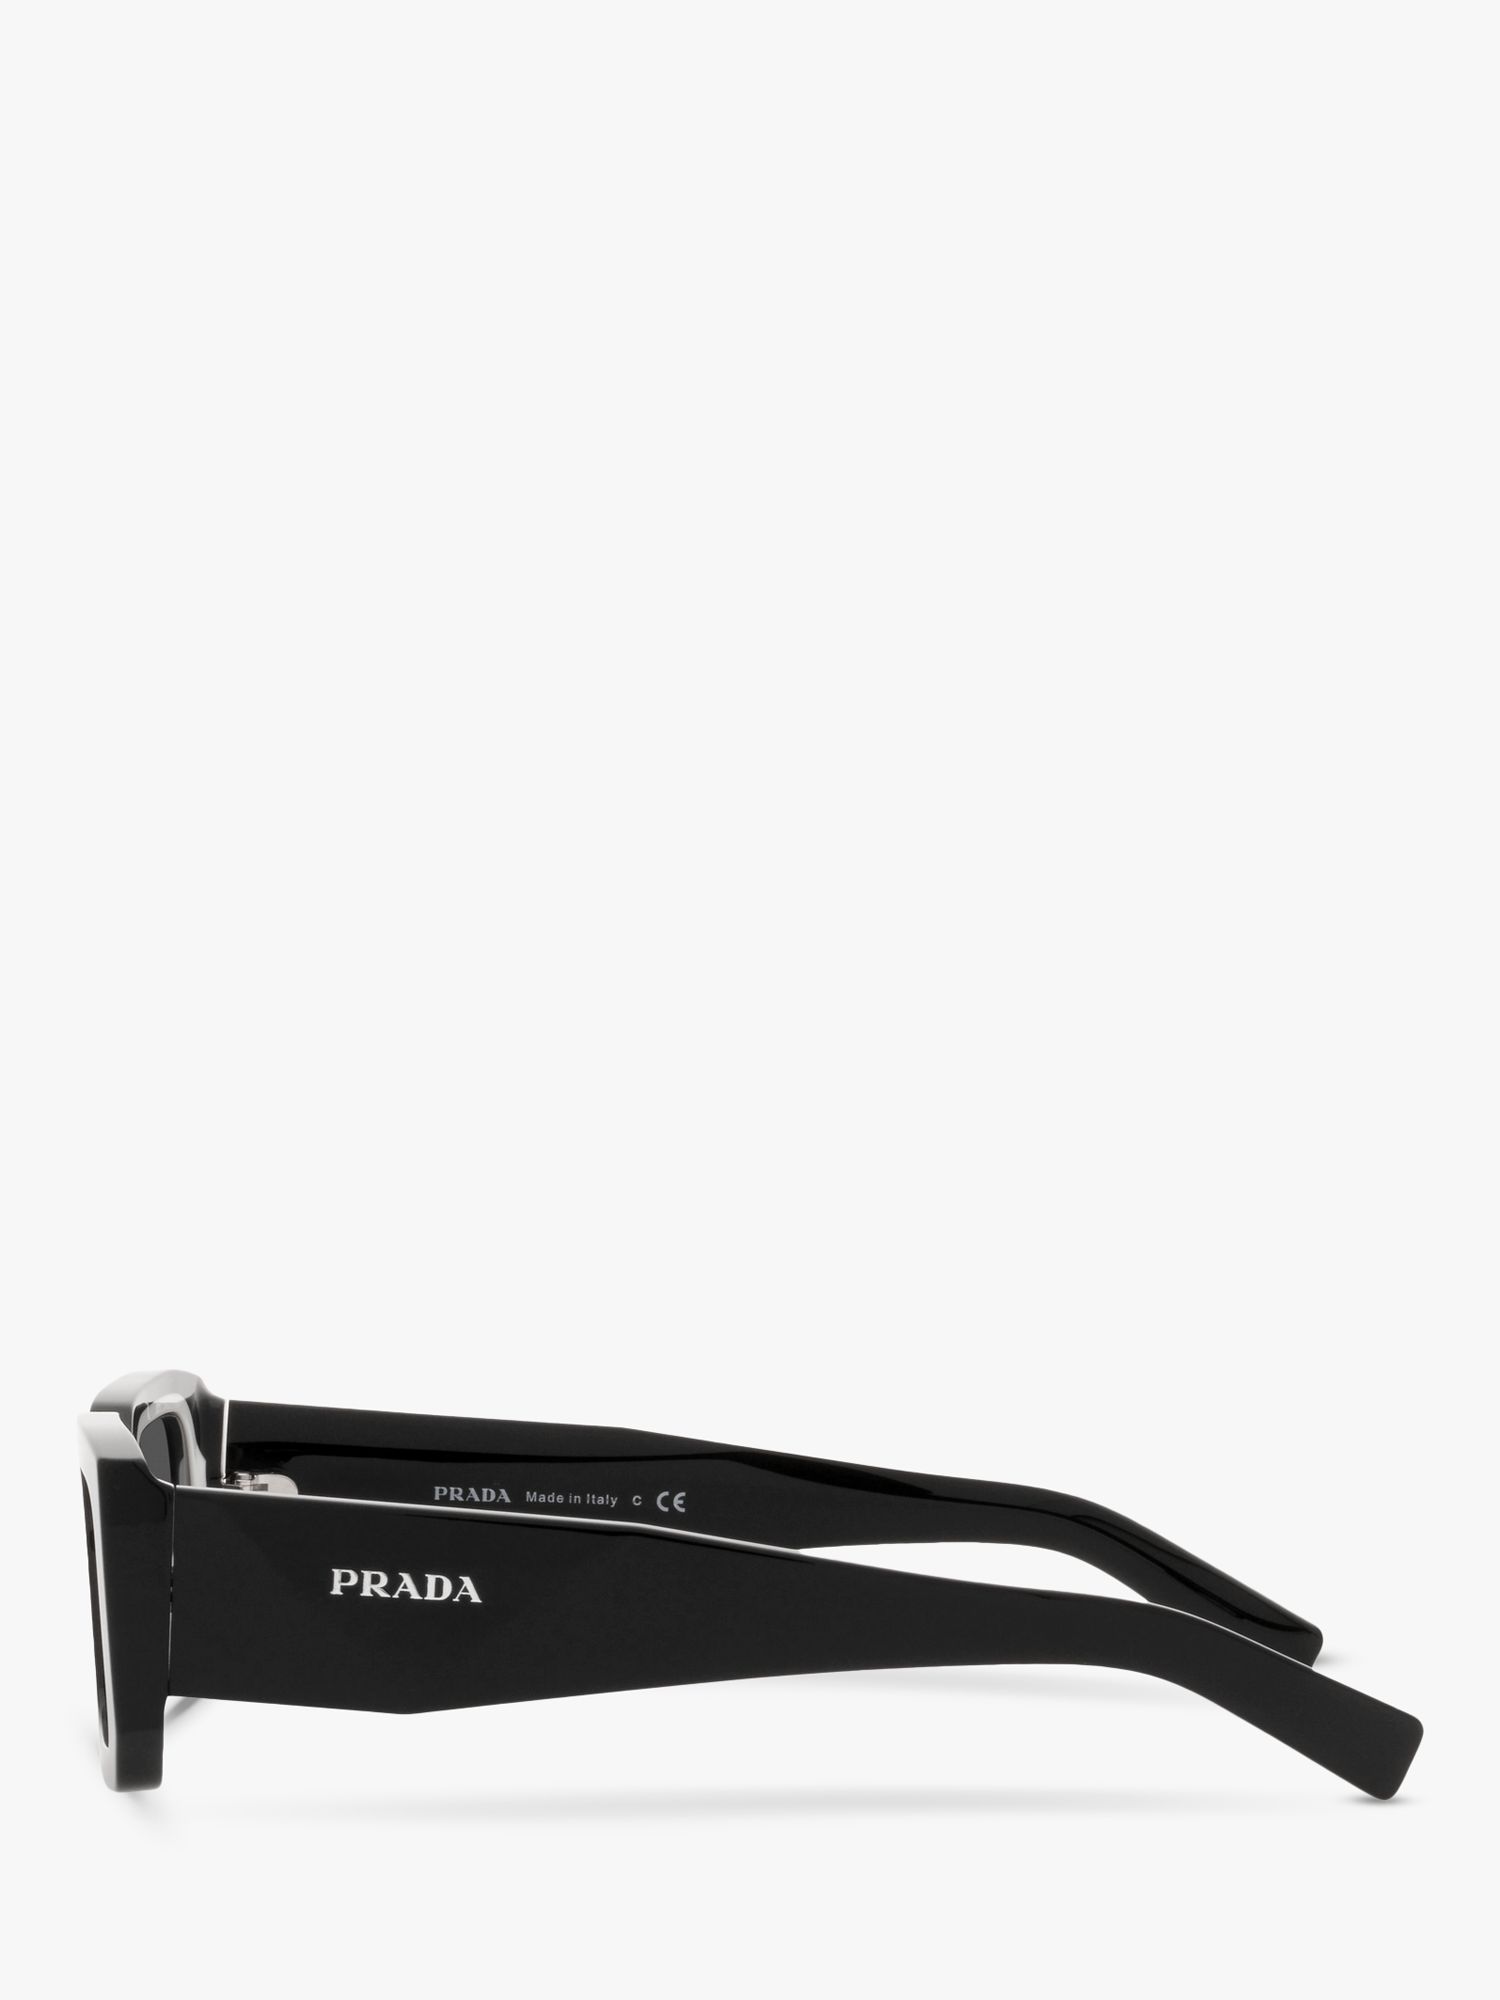 Buy Prada PR 06YS Men's Rectangular Sunglasses Online at johnlewis.com